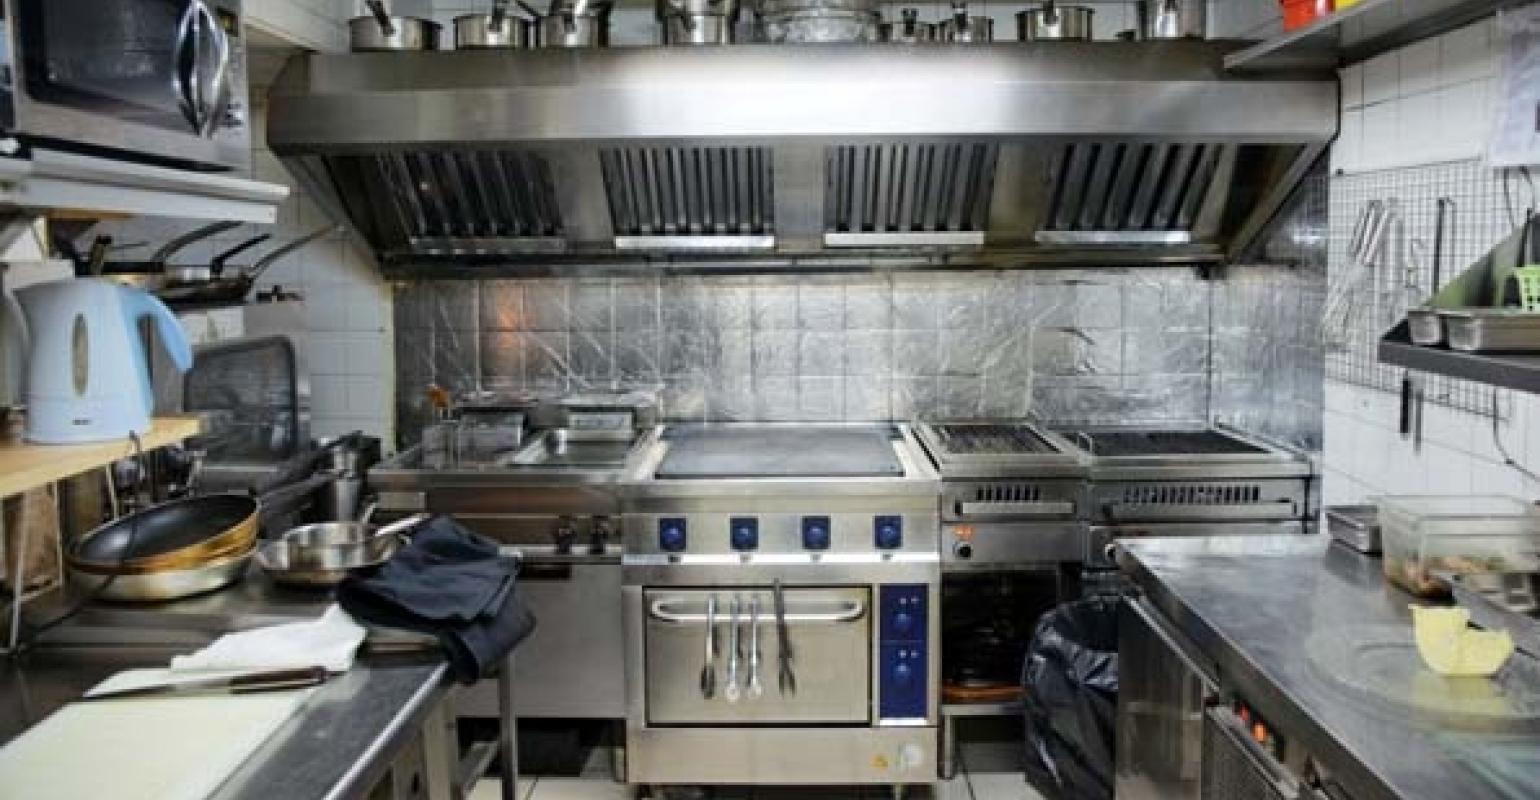 https://www.nrn.com/sites/nrn.com/files/styles/article_featured_retina/public/uploads/2013/07/restaurant-kitchen-stock_0.jpg?itok=kVRmwCjU